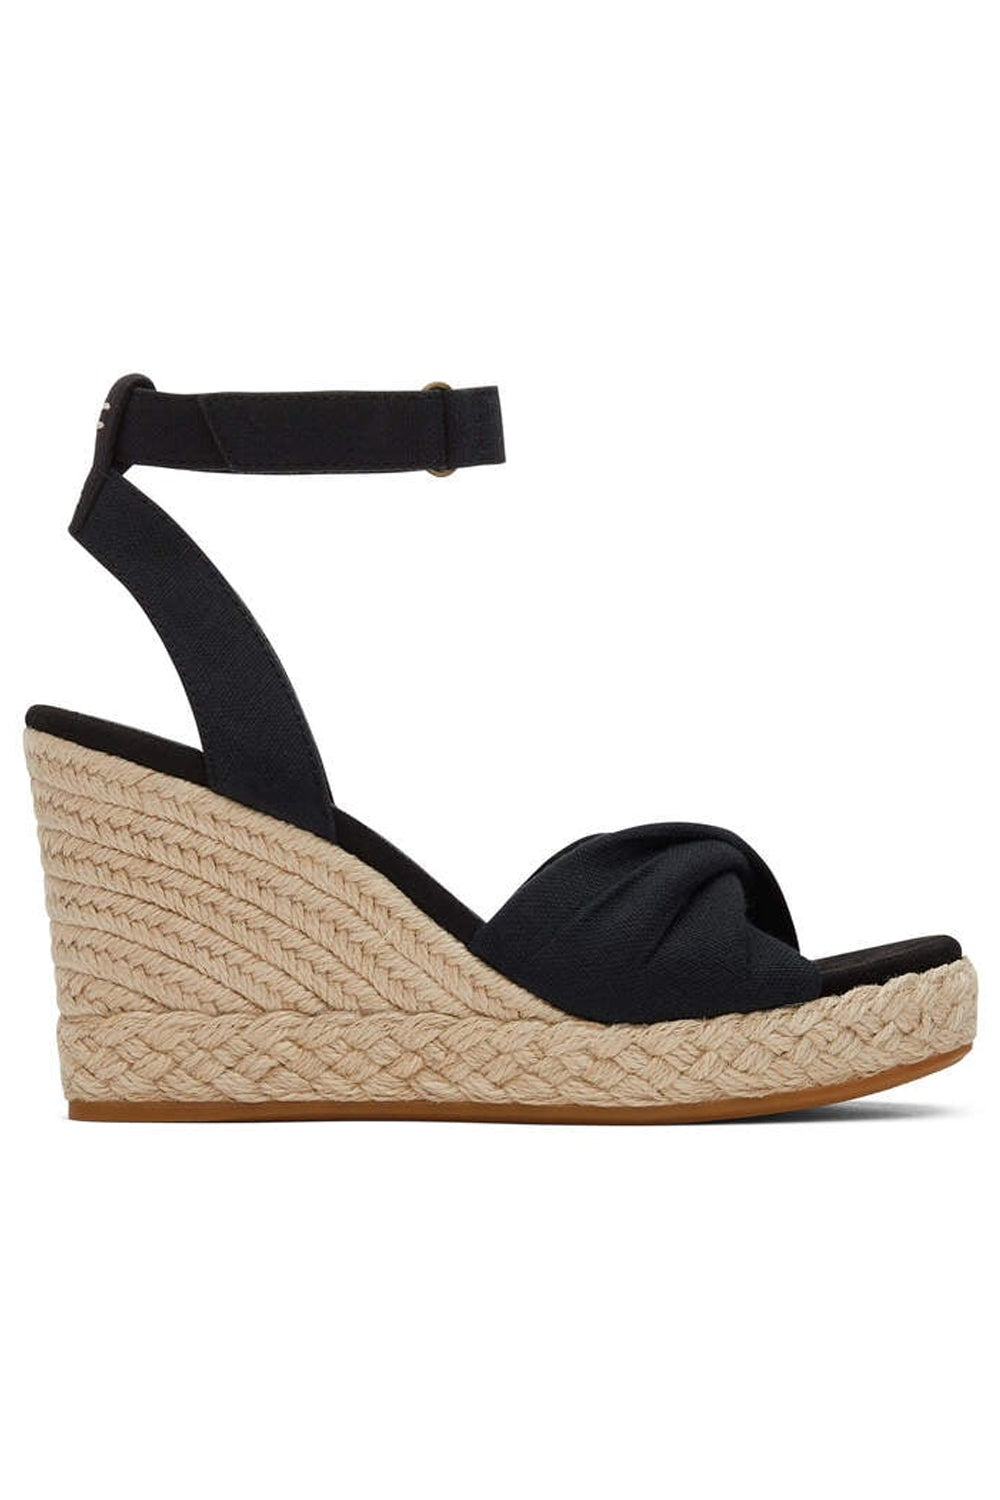 The Marisol Wedges Fuchsia  Women shoes, Summer sandals wedge